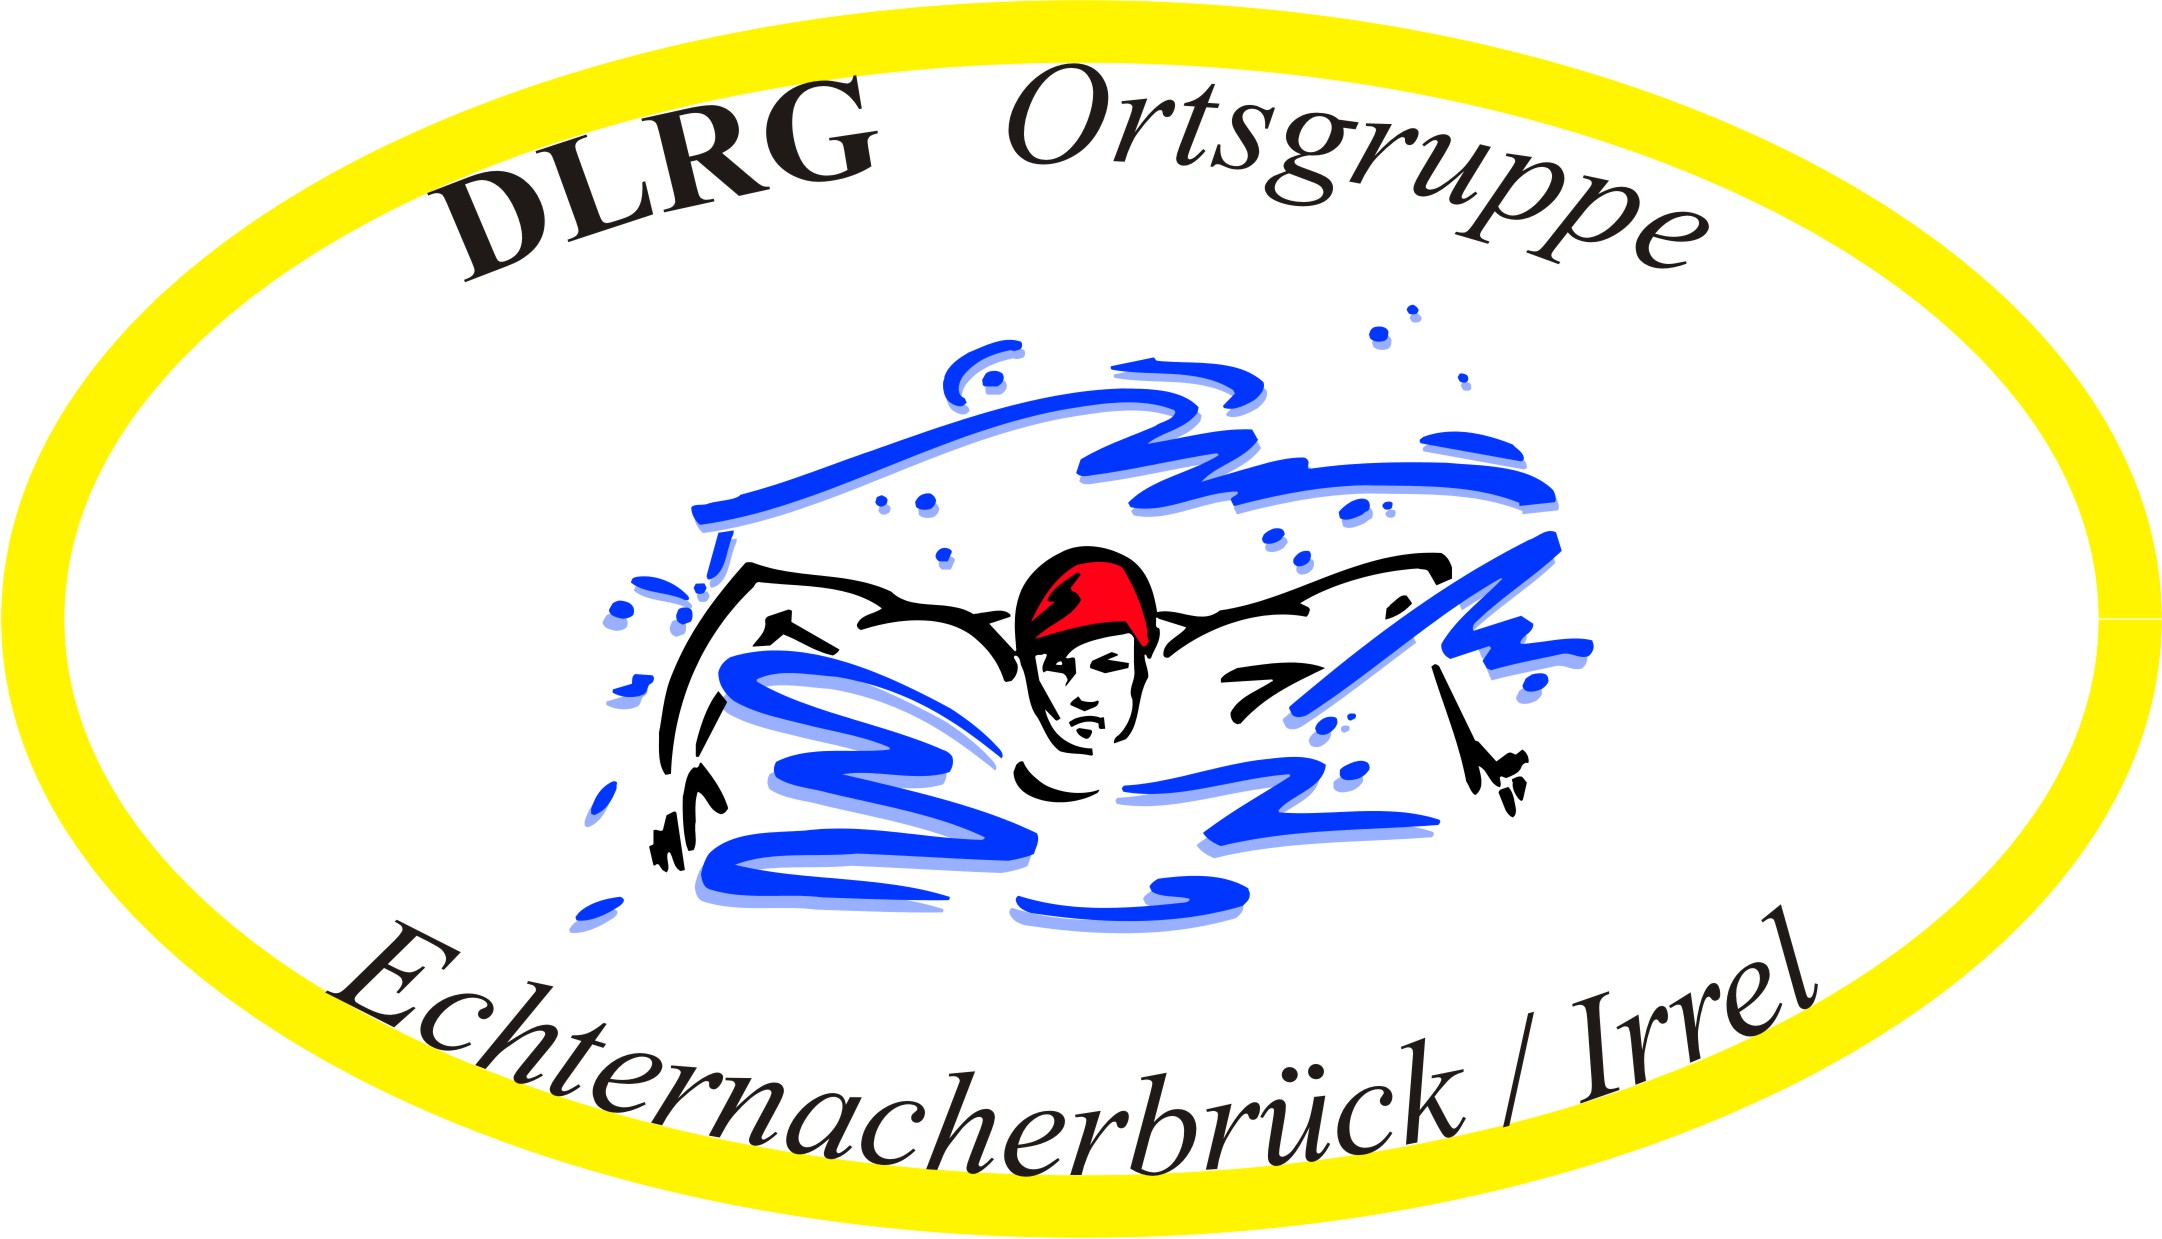 DLRG Echternacherbrück Title Image